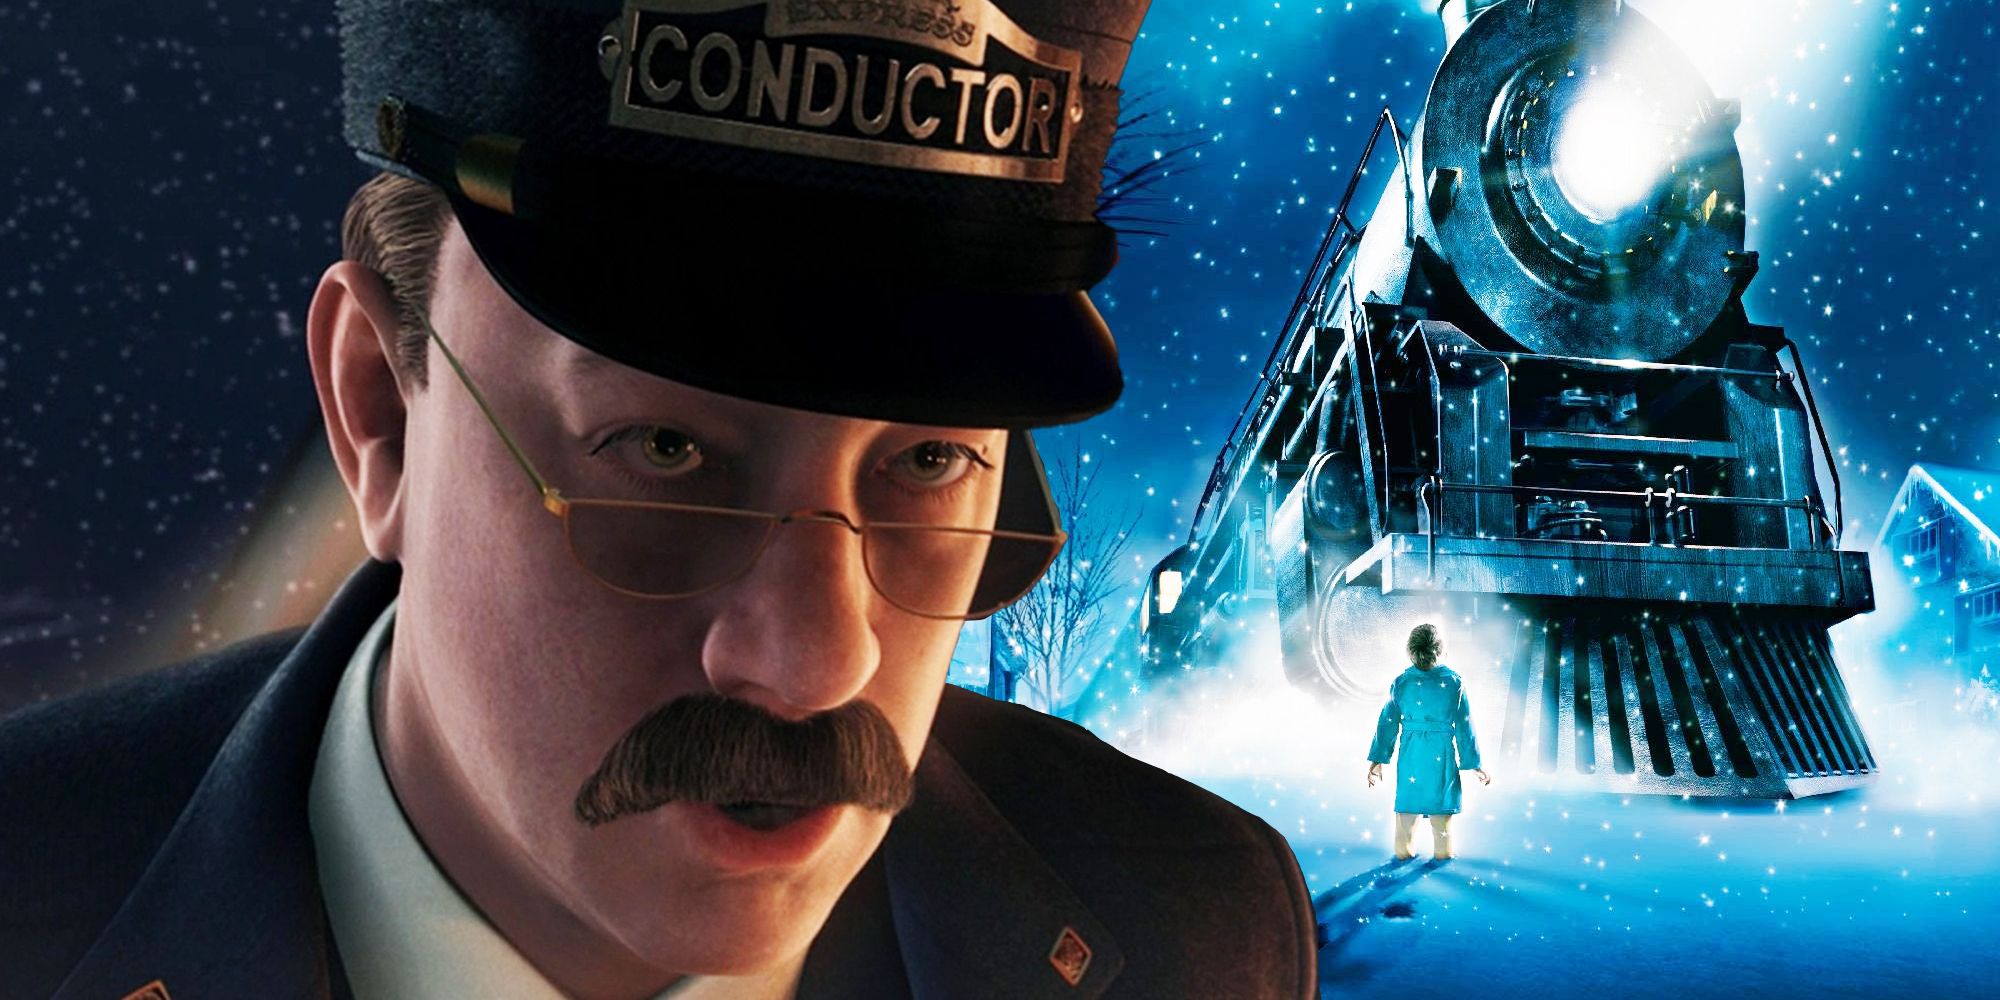 Polar Express' Movie: Behind-the-Scenes Film Secrets